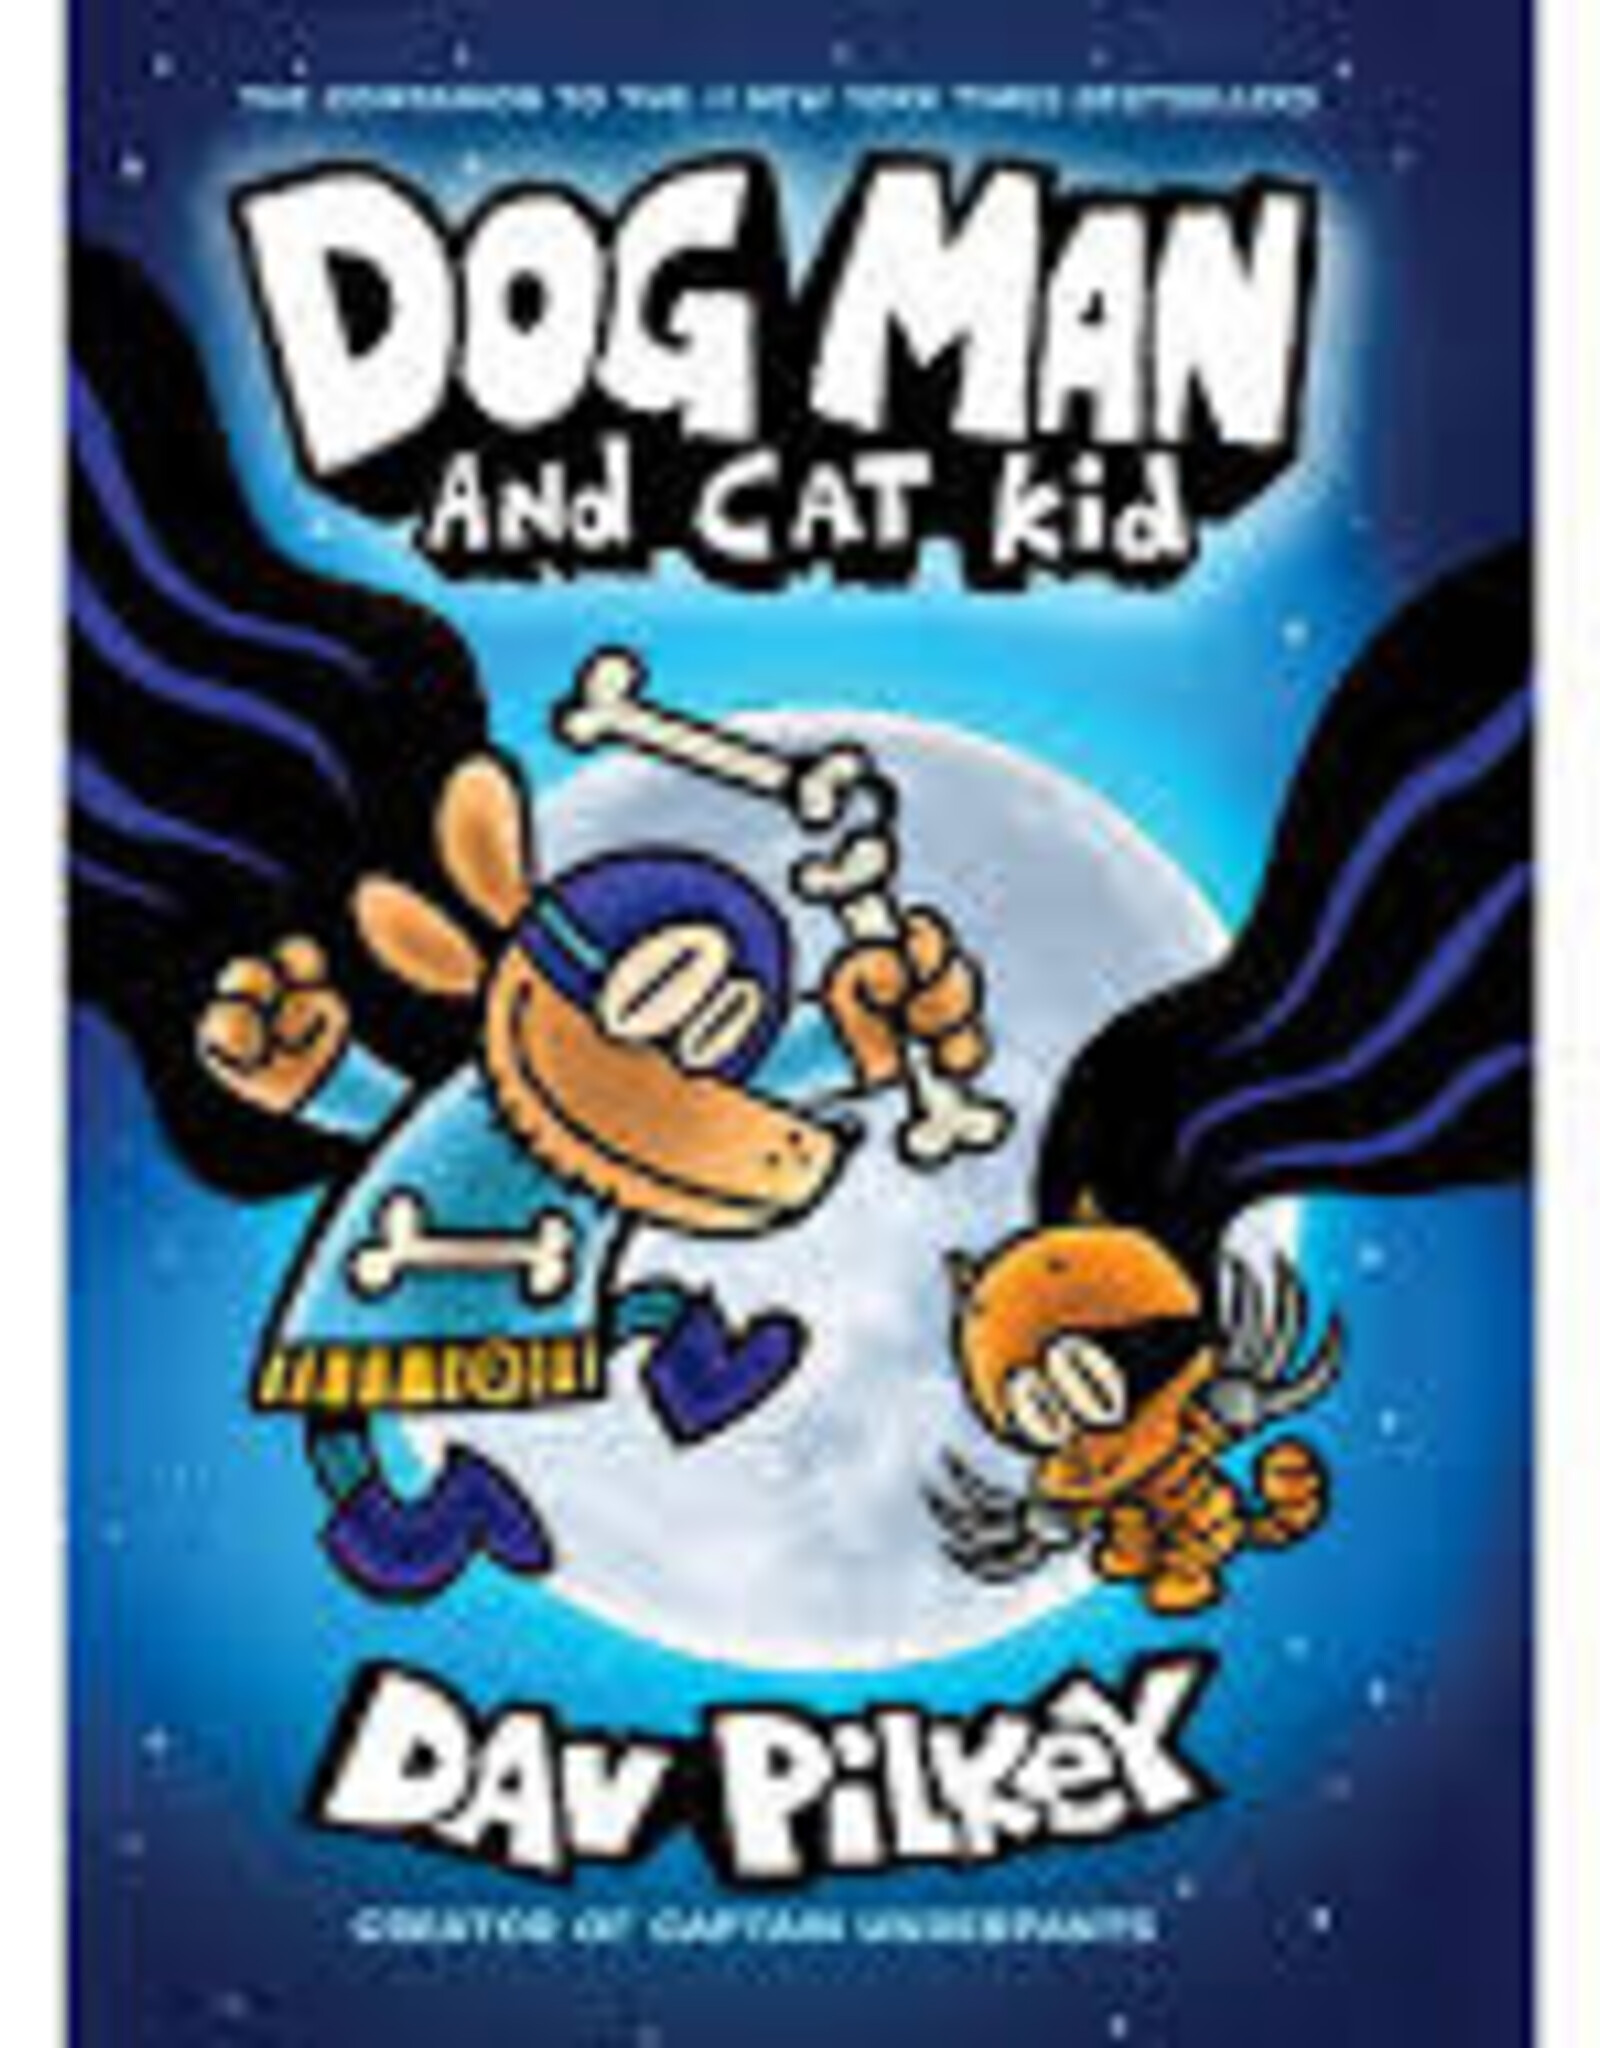 Scholastic Pilkey - Dog Man and Cat Kid -  A Graphic Novel Vol 4